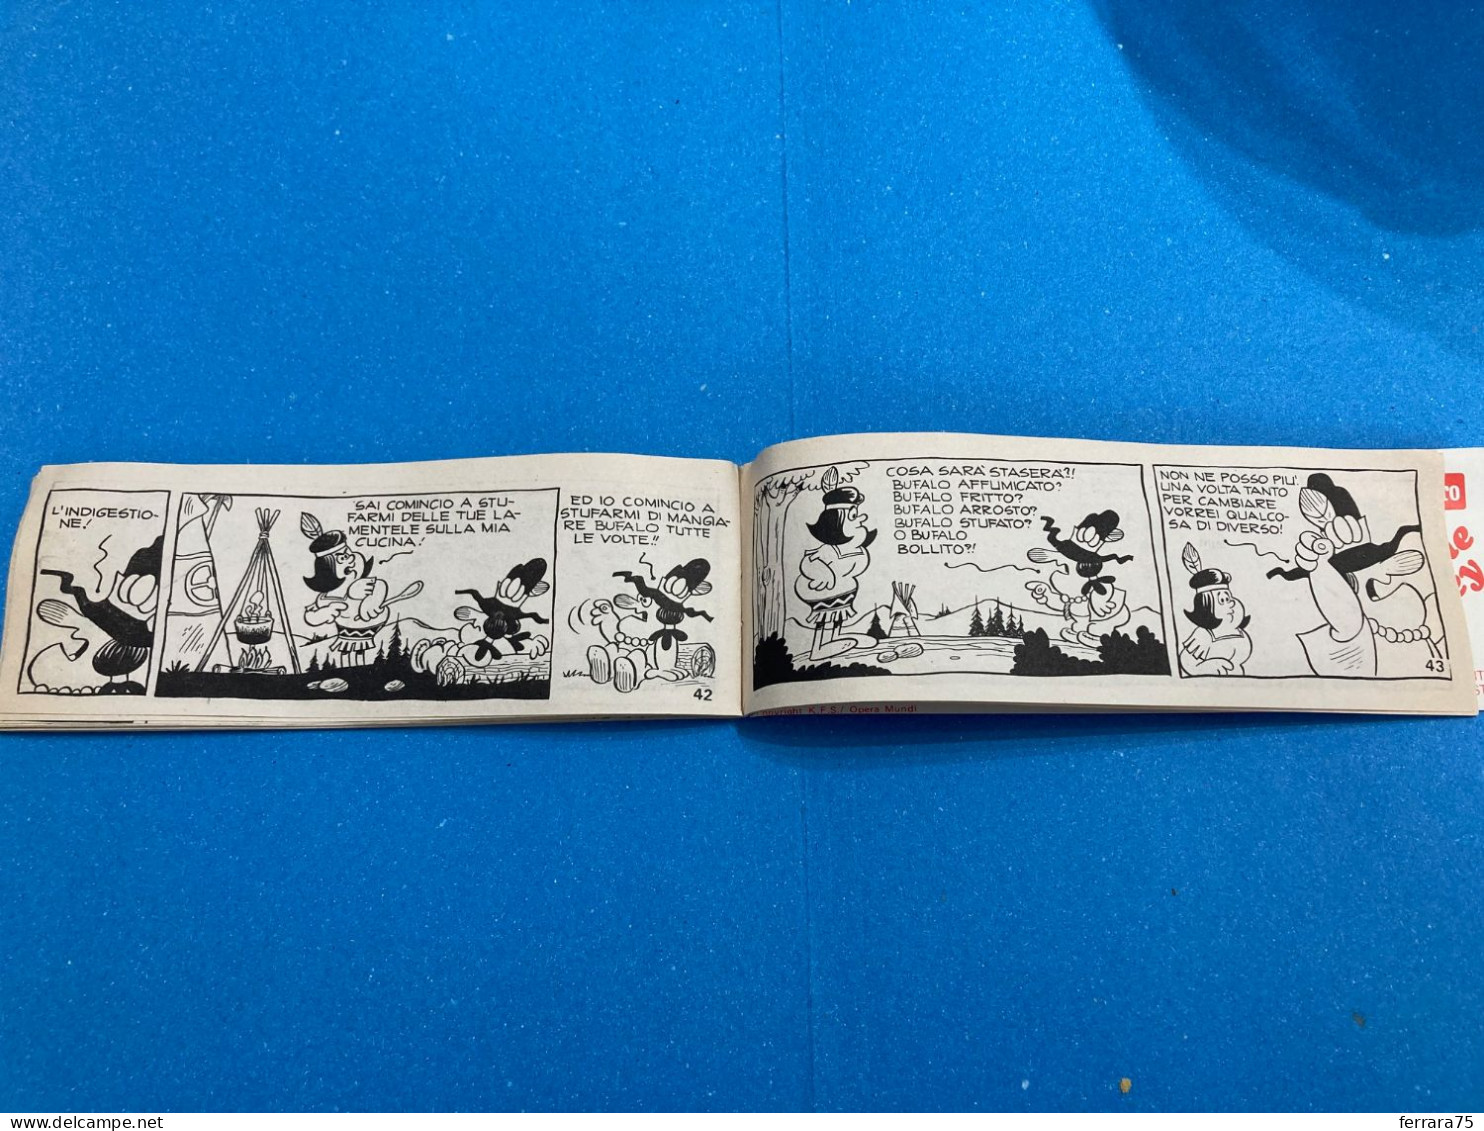 GORDON BESS: COMIC ART PALADINO NASO ROSSO REDEYE 12 STORIE COMPLETE 1970 FUMETTO STRISCIA.